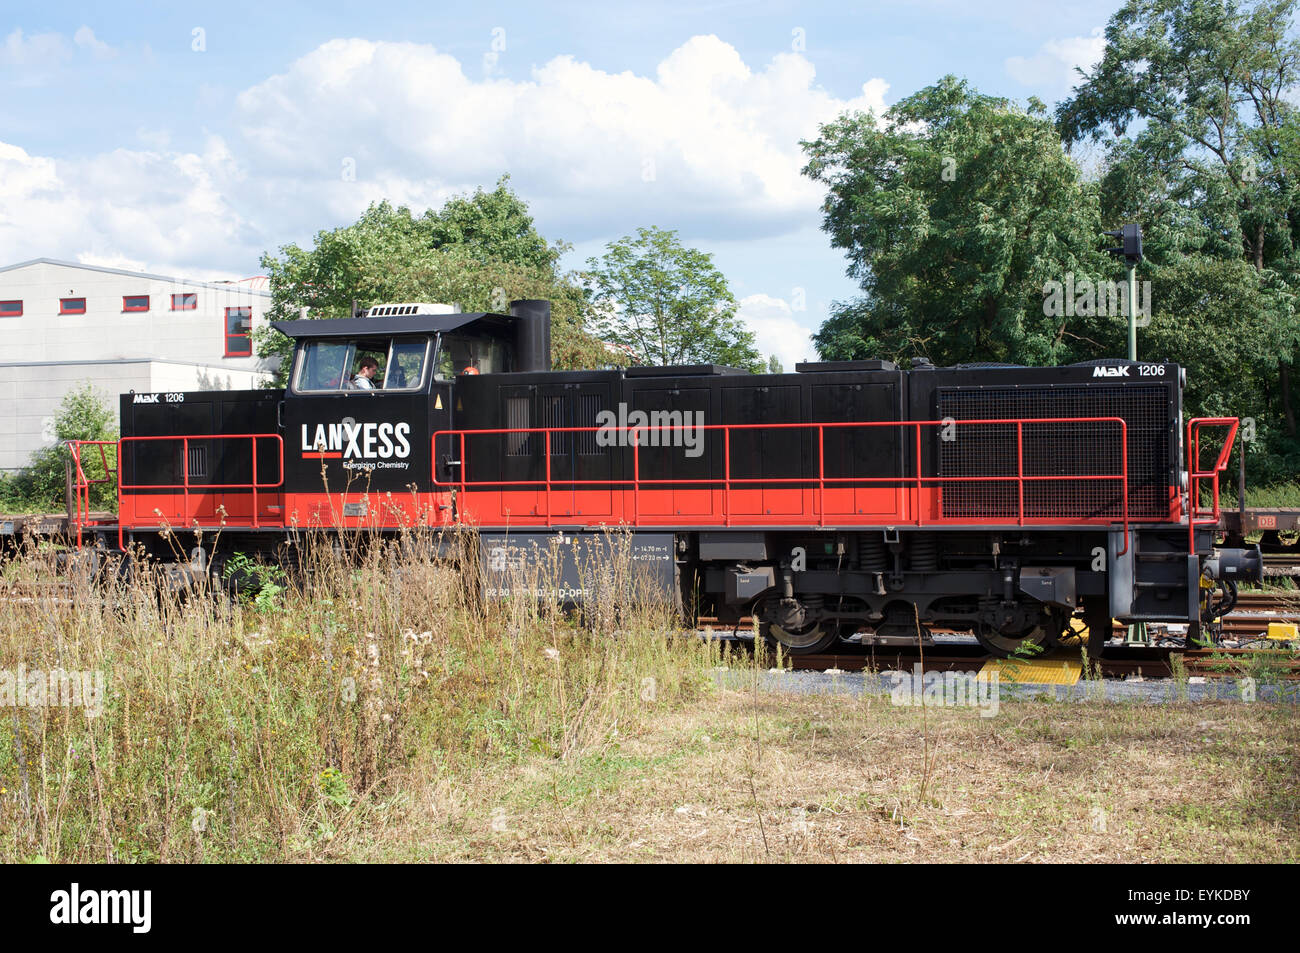 Mak 1206 diesel locomotive waiting at signal red light, Duisburg, North Rhine-Westphalia, Germany. Stock Photo